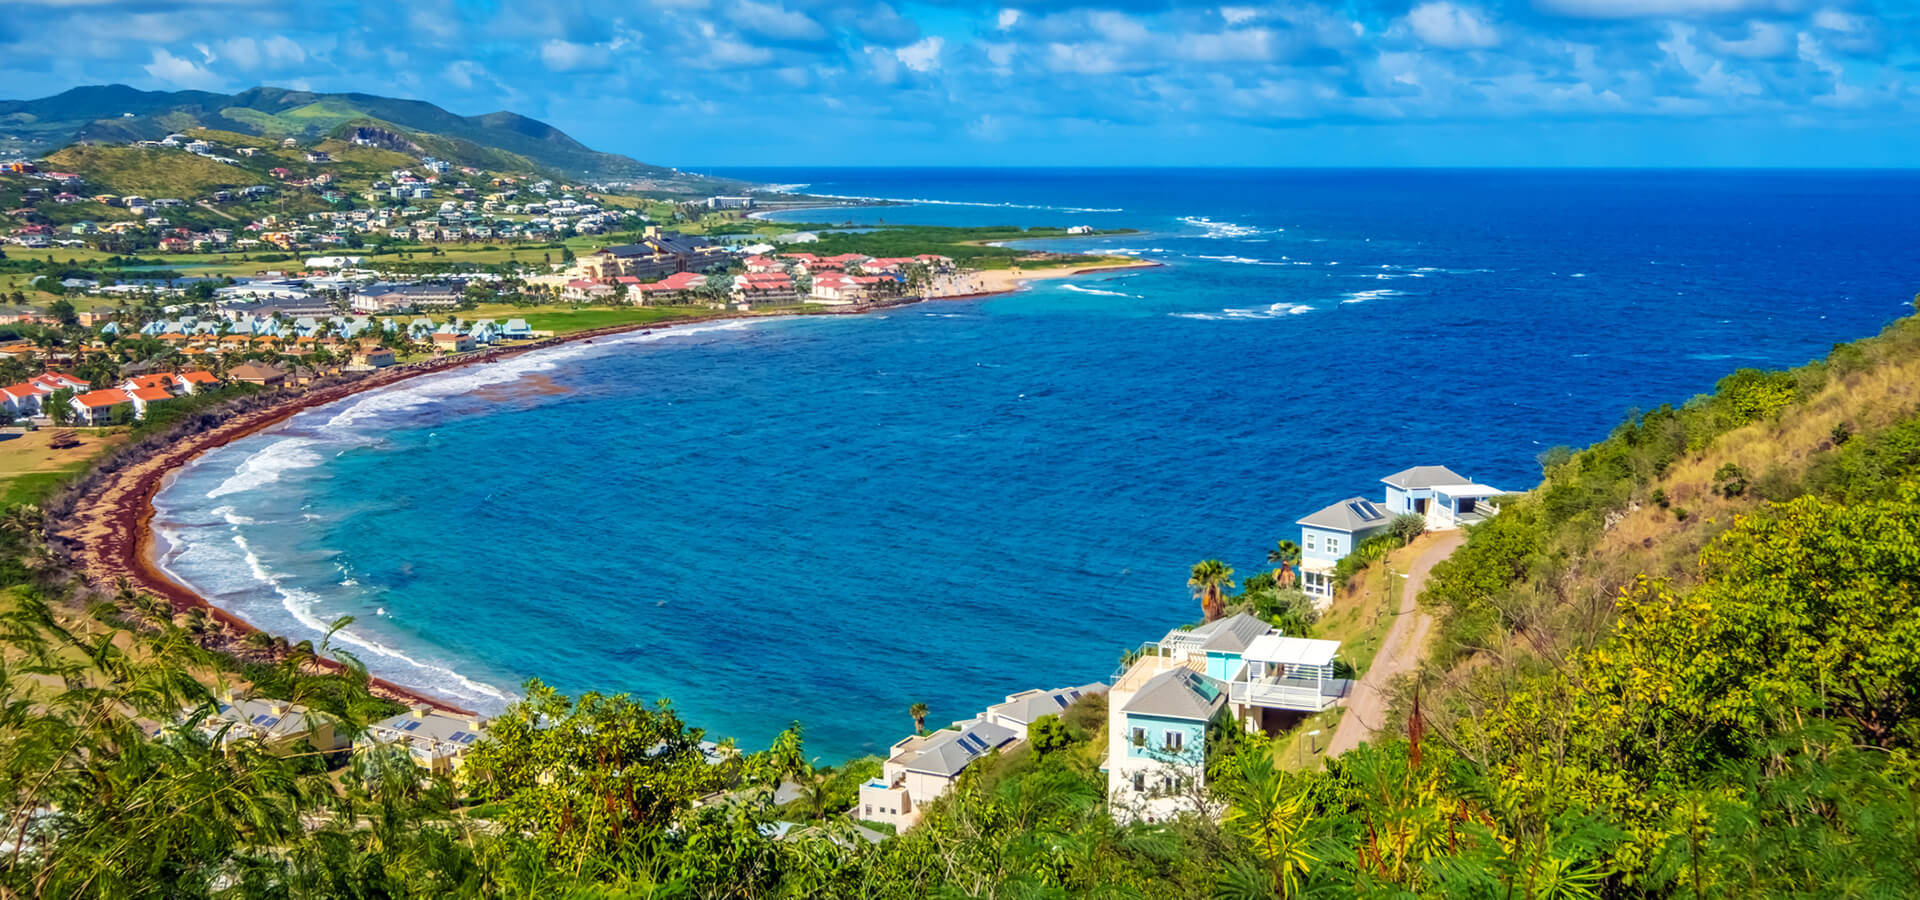 Blue Ocean In St Kitts And Nevis Wallpaper